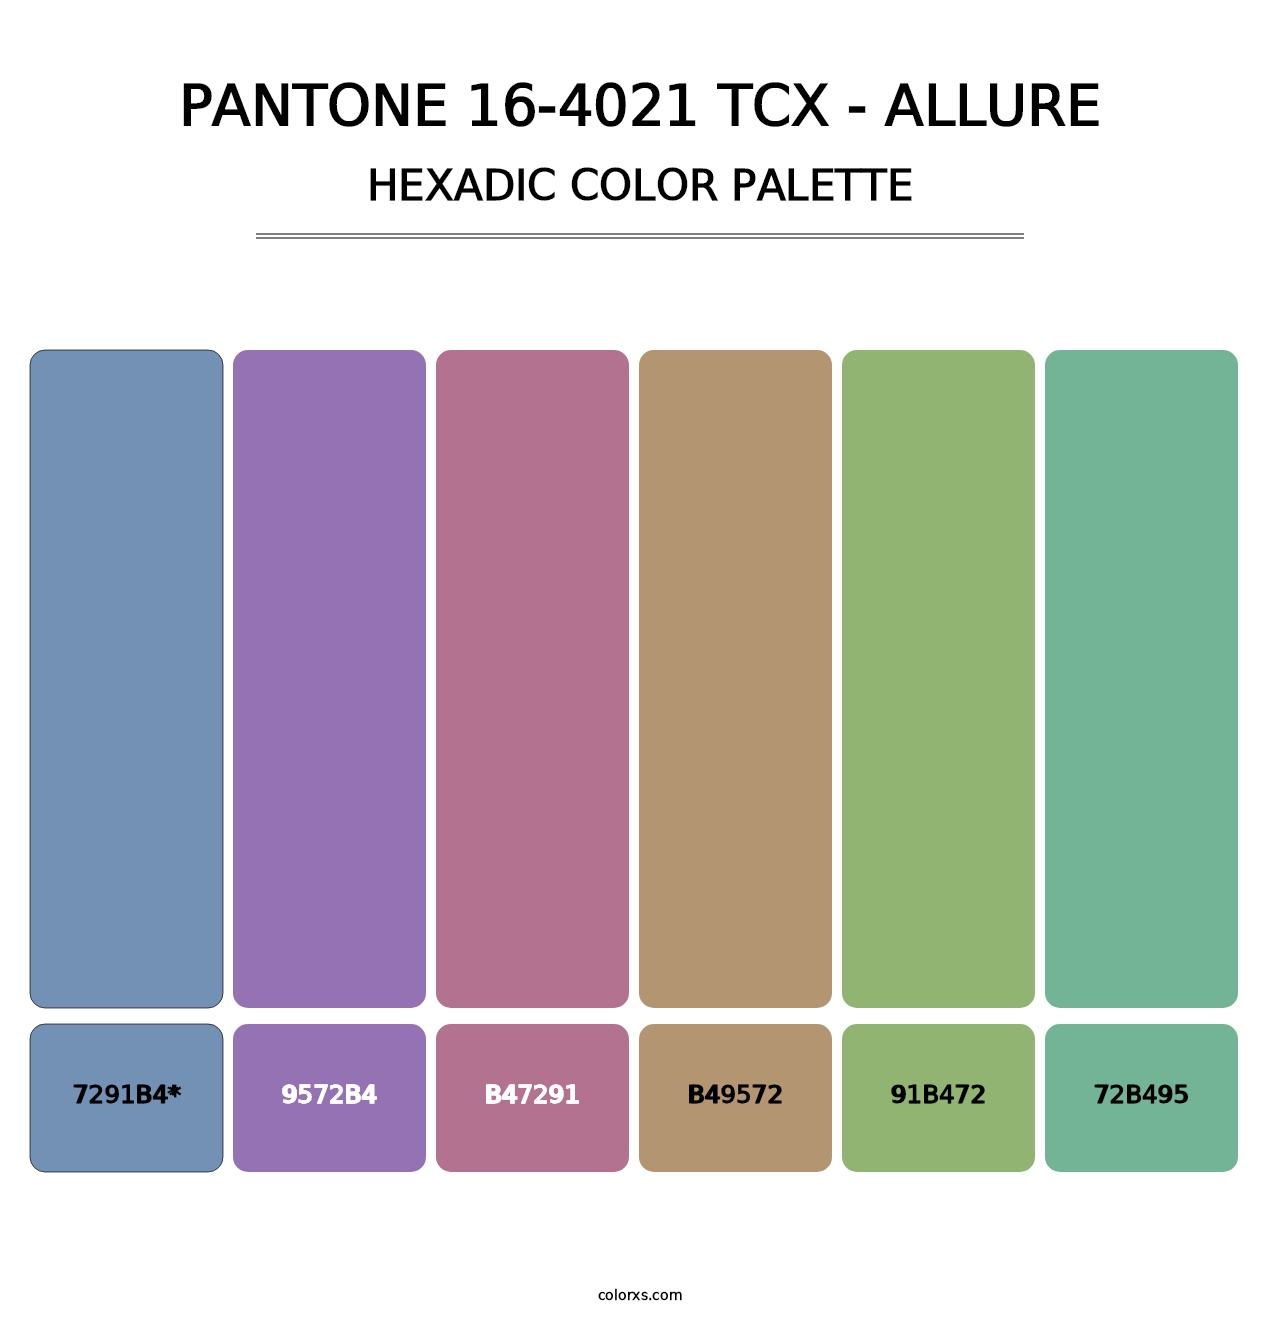 PANTONE 16-4021 TCX - Allure - Hexadic Color Palette